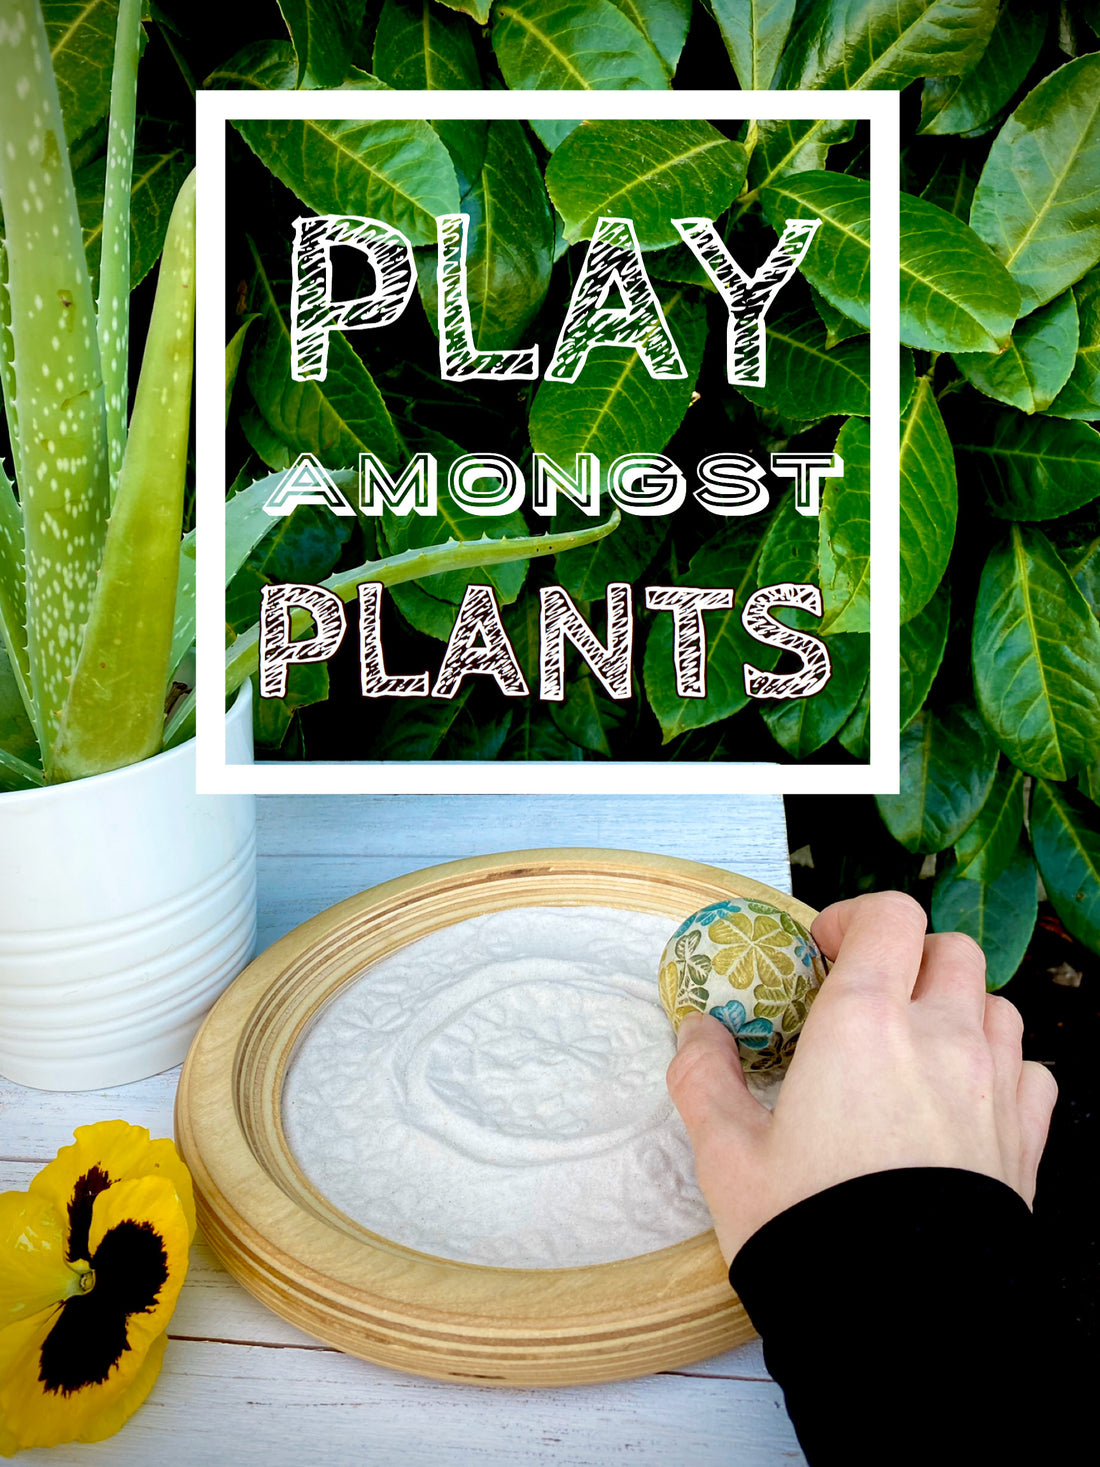 Play Amongst the Plants